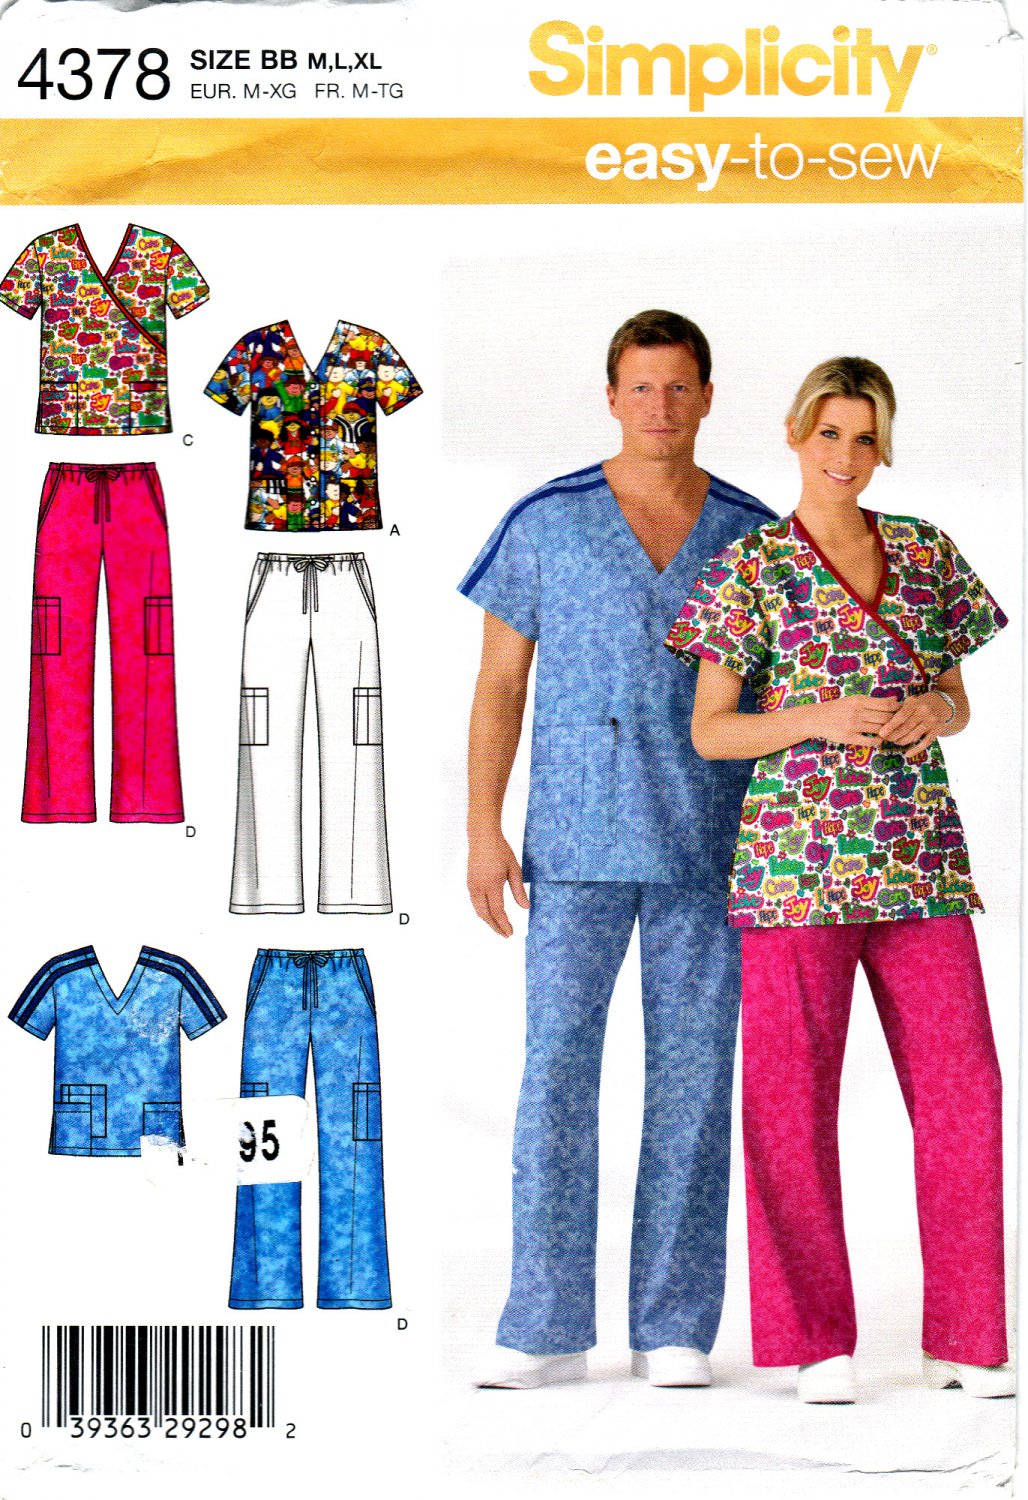 Simplicity 4378 Misses Mens Teens Sewing Pattern Uniform Scrubs Pants Tops Unisex Sizes M-L-XL Easy